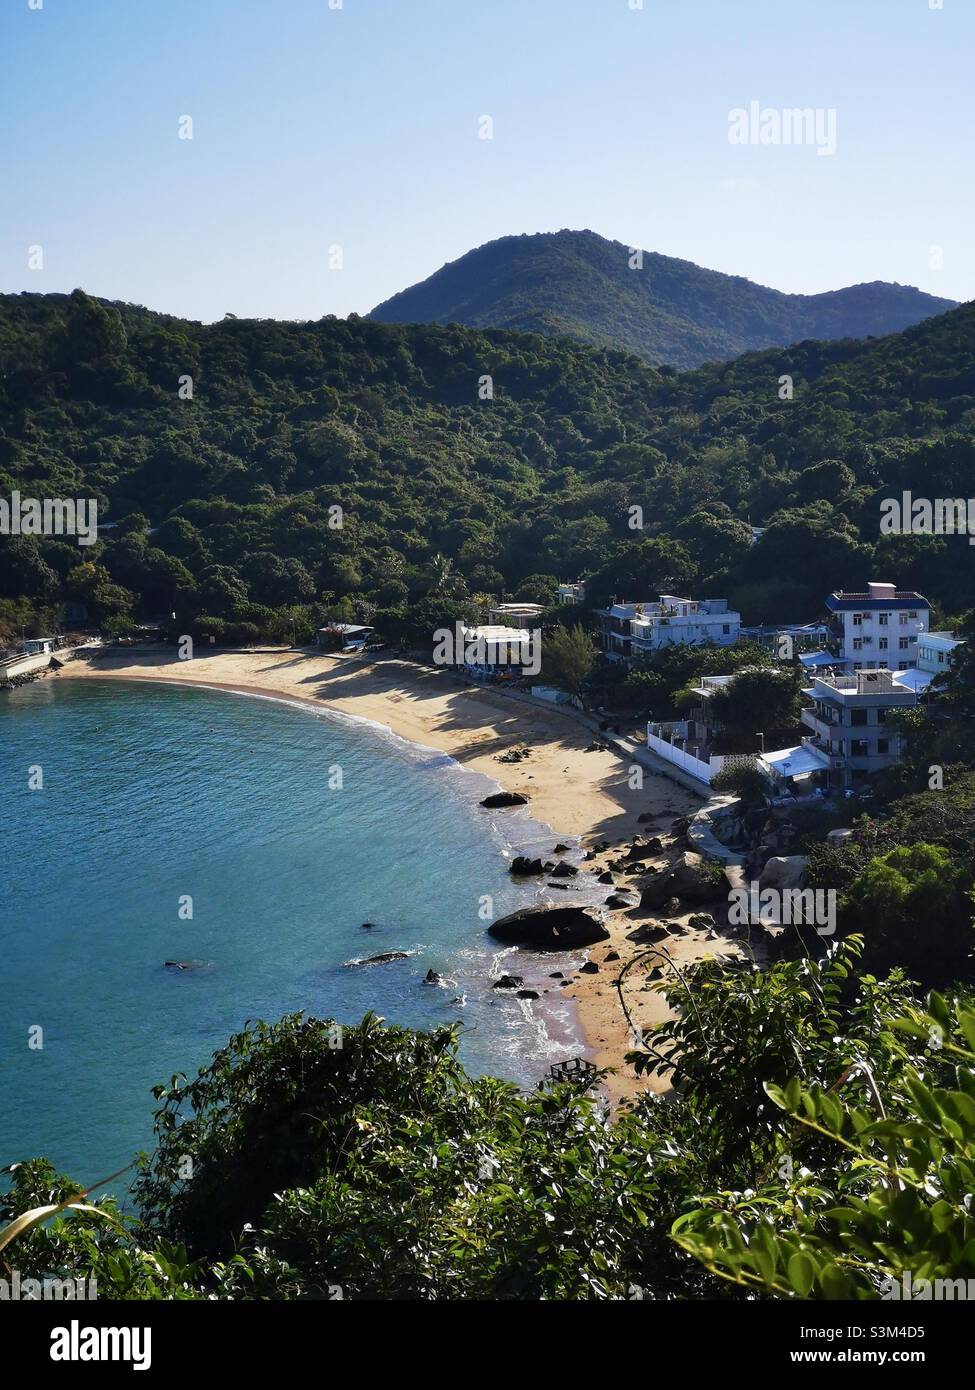 Aerial view of Mo Tat beach on Lamma island in Hong Kong. Stock Photo